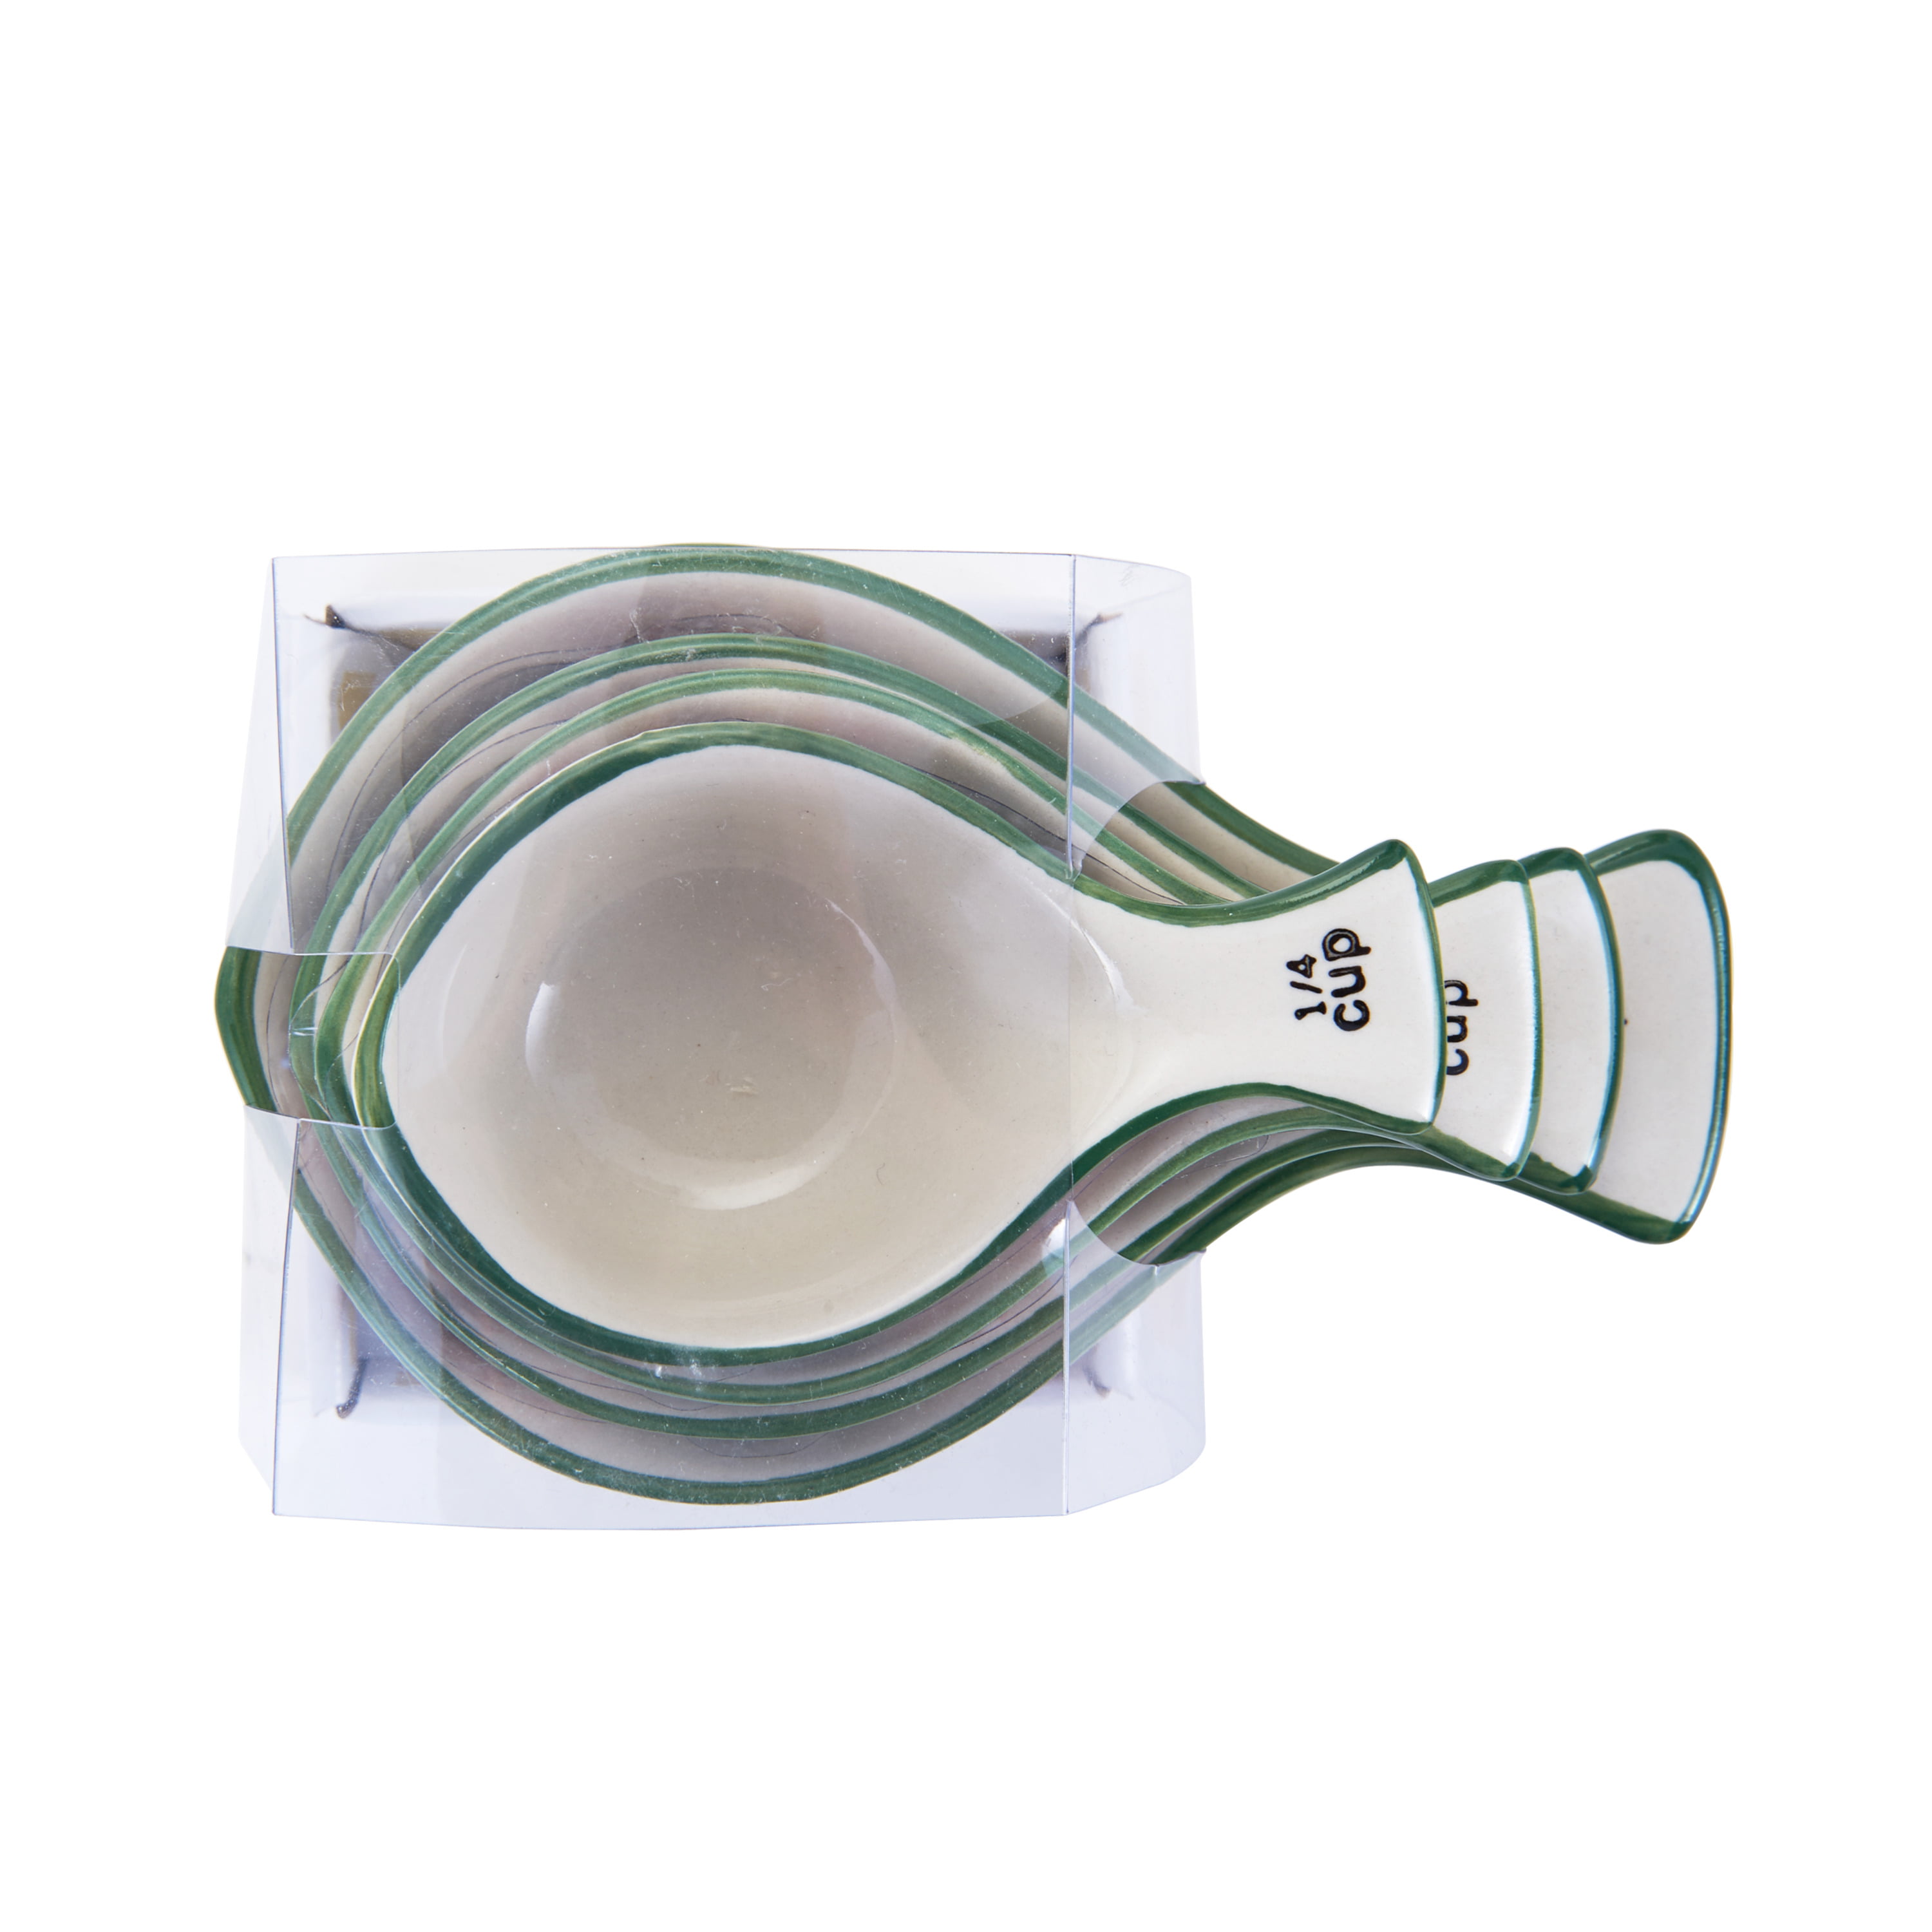 Pfaltzgraff Pink/Green Ceramic Measuring Cups Set of 4 